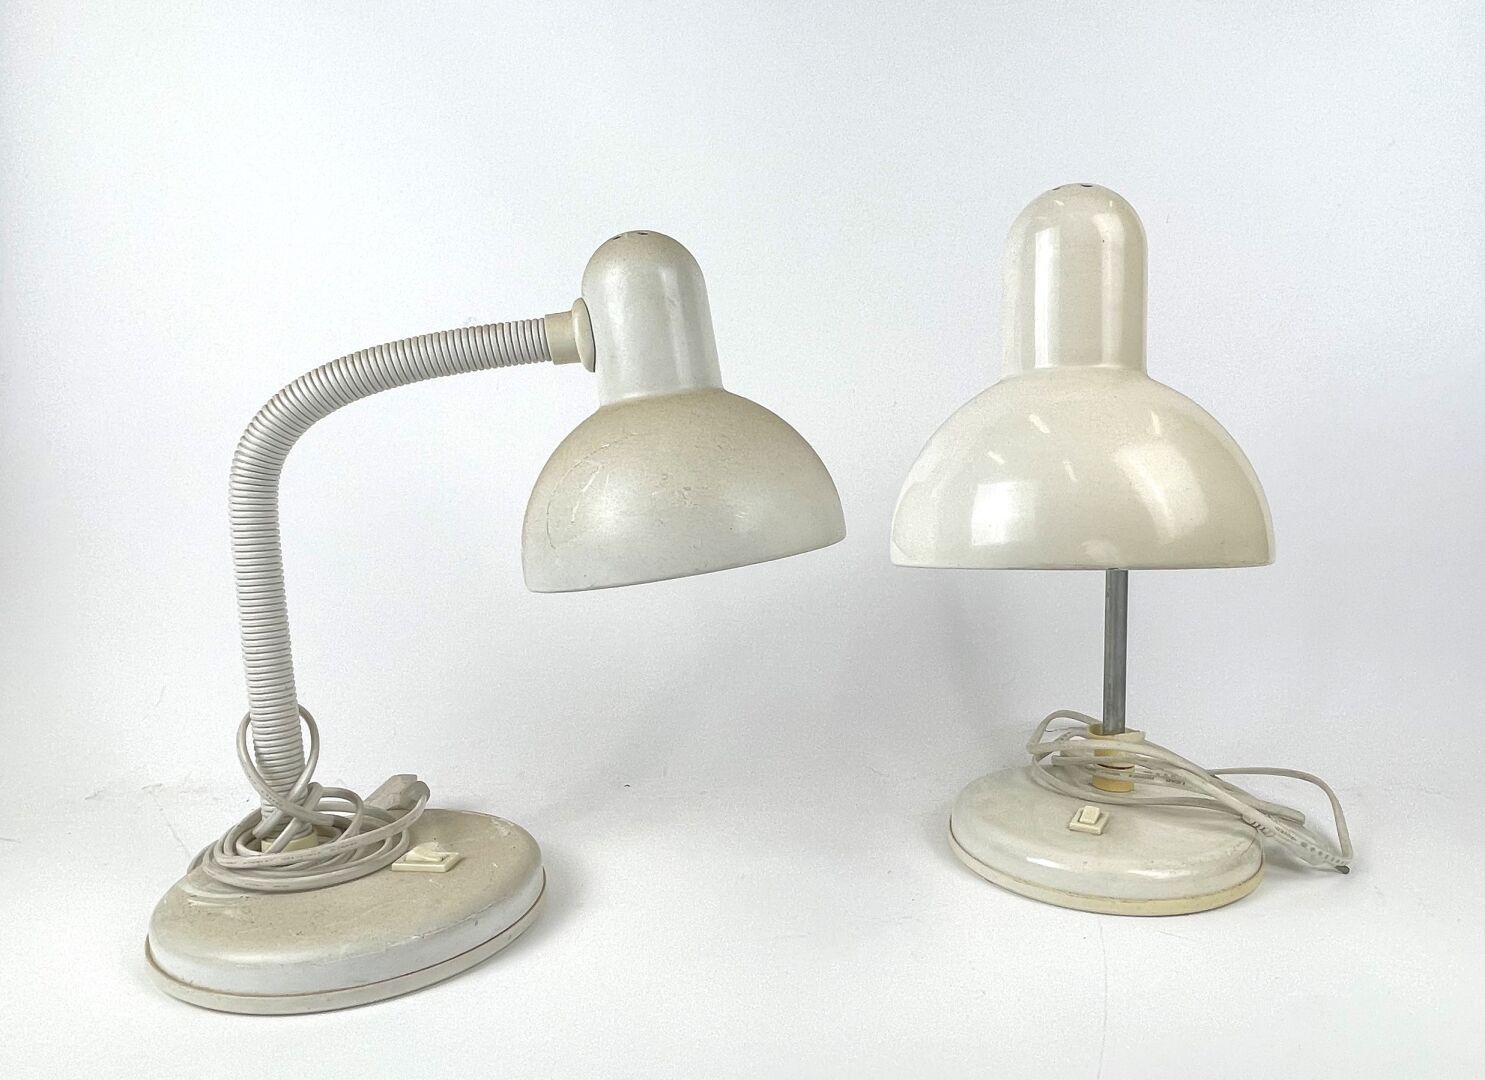 Null 风格。
两个白色塑料和金属的台灯。
80年代的作品。
高度：34厘米左右。
(磨损)。